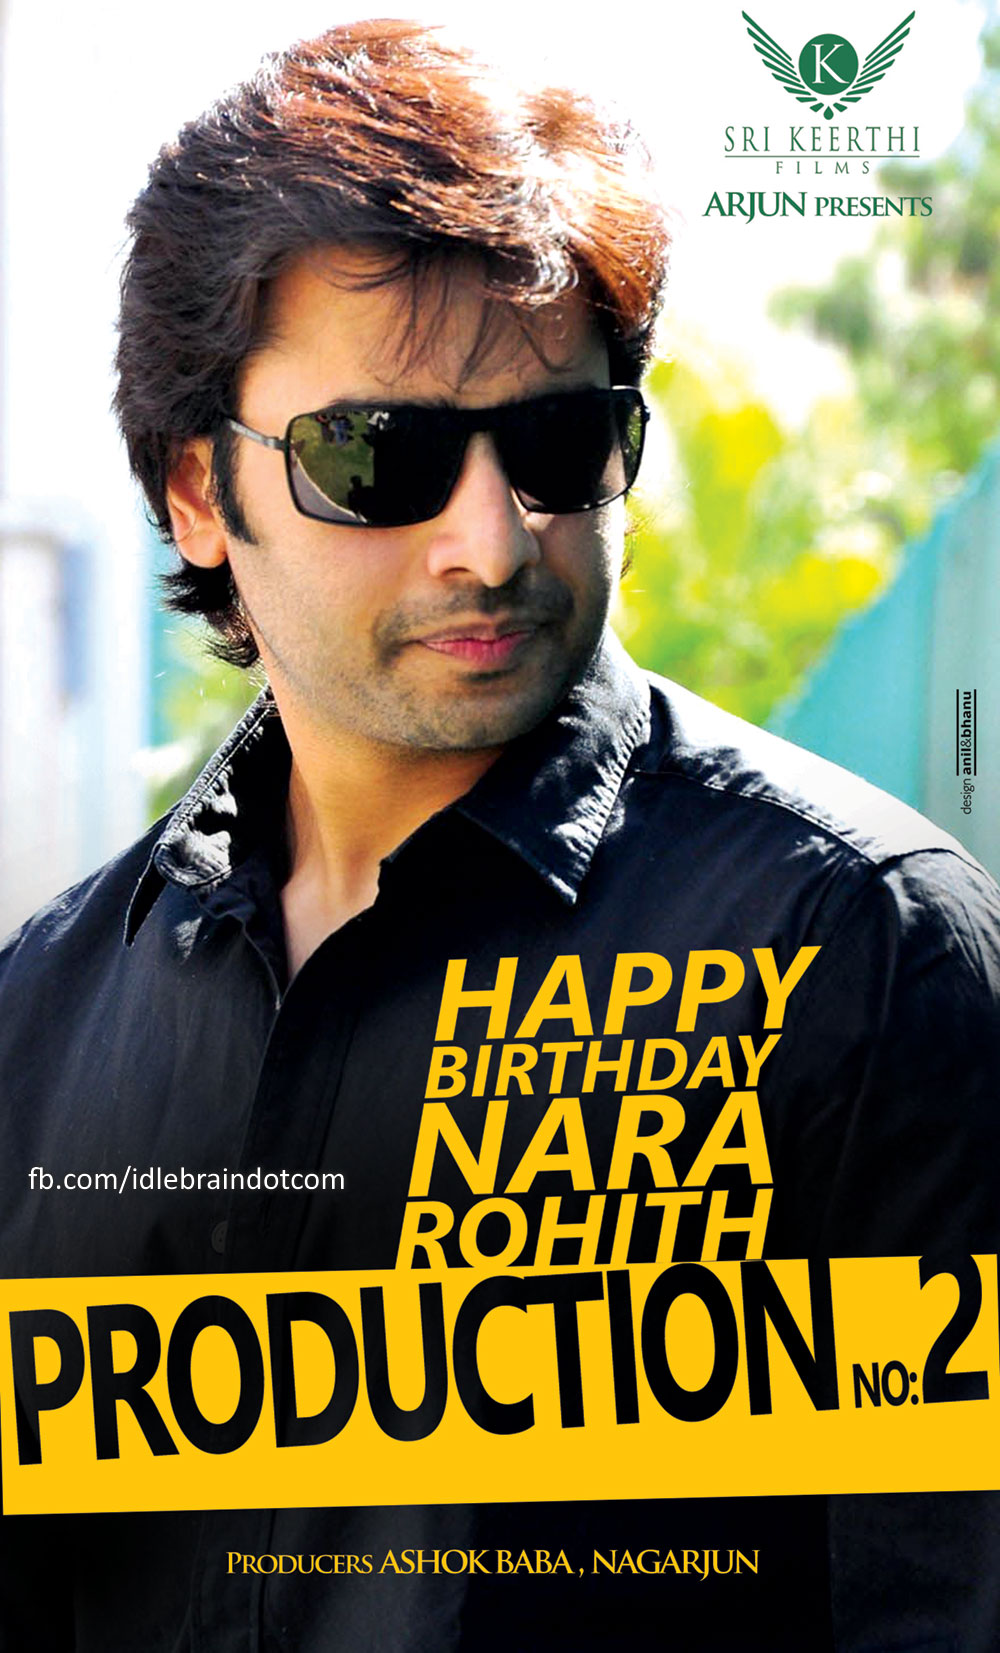 <b>Sri Keerthi</b> Films production No. 2 - Nara Rohit Birthday poster - Telugu <b>...</b> - birthdayposter-nararohit2015